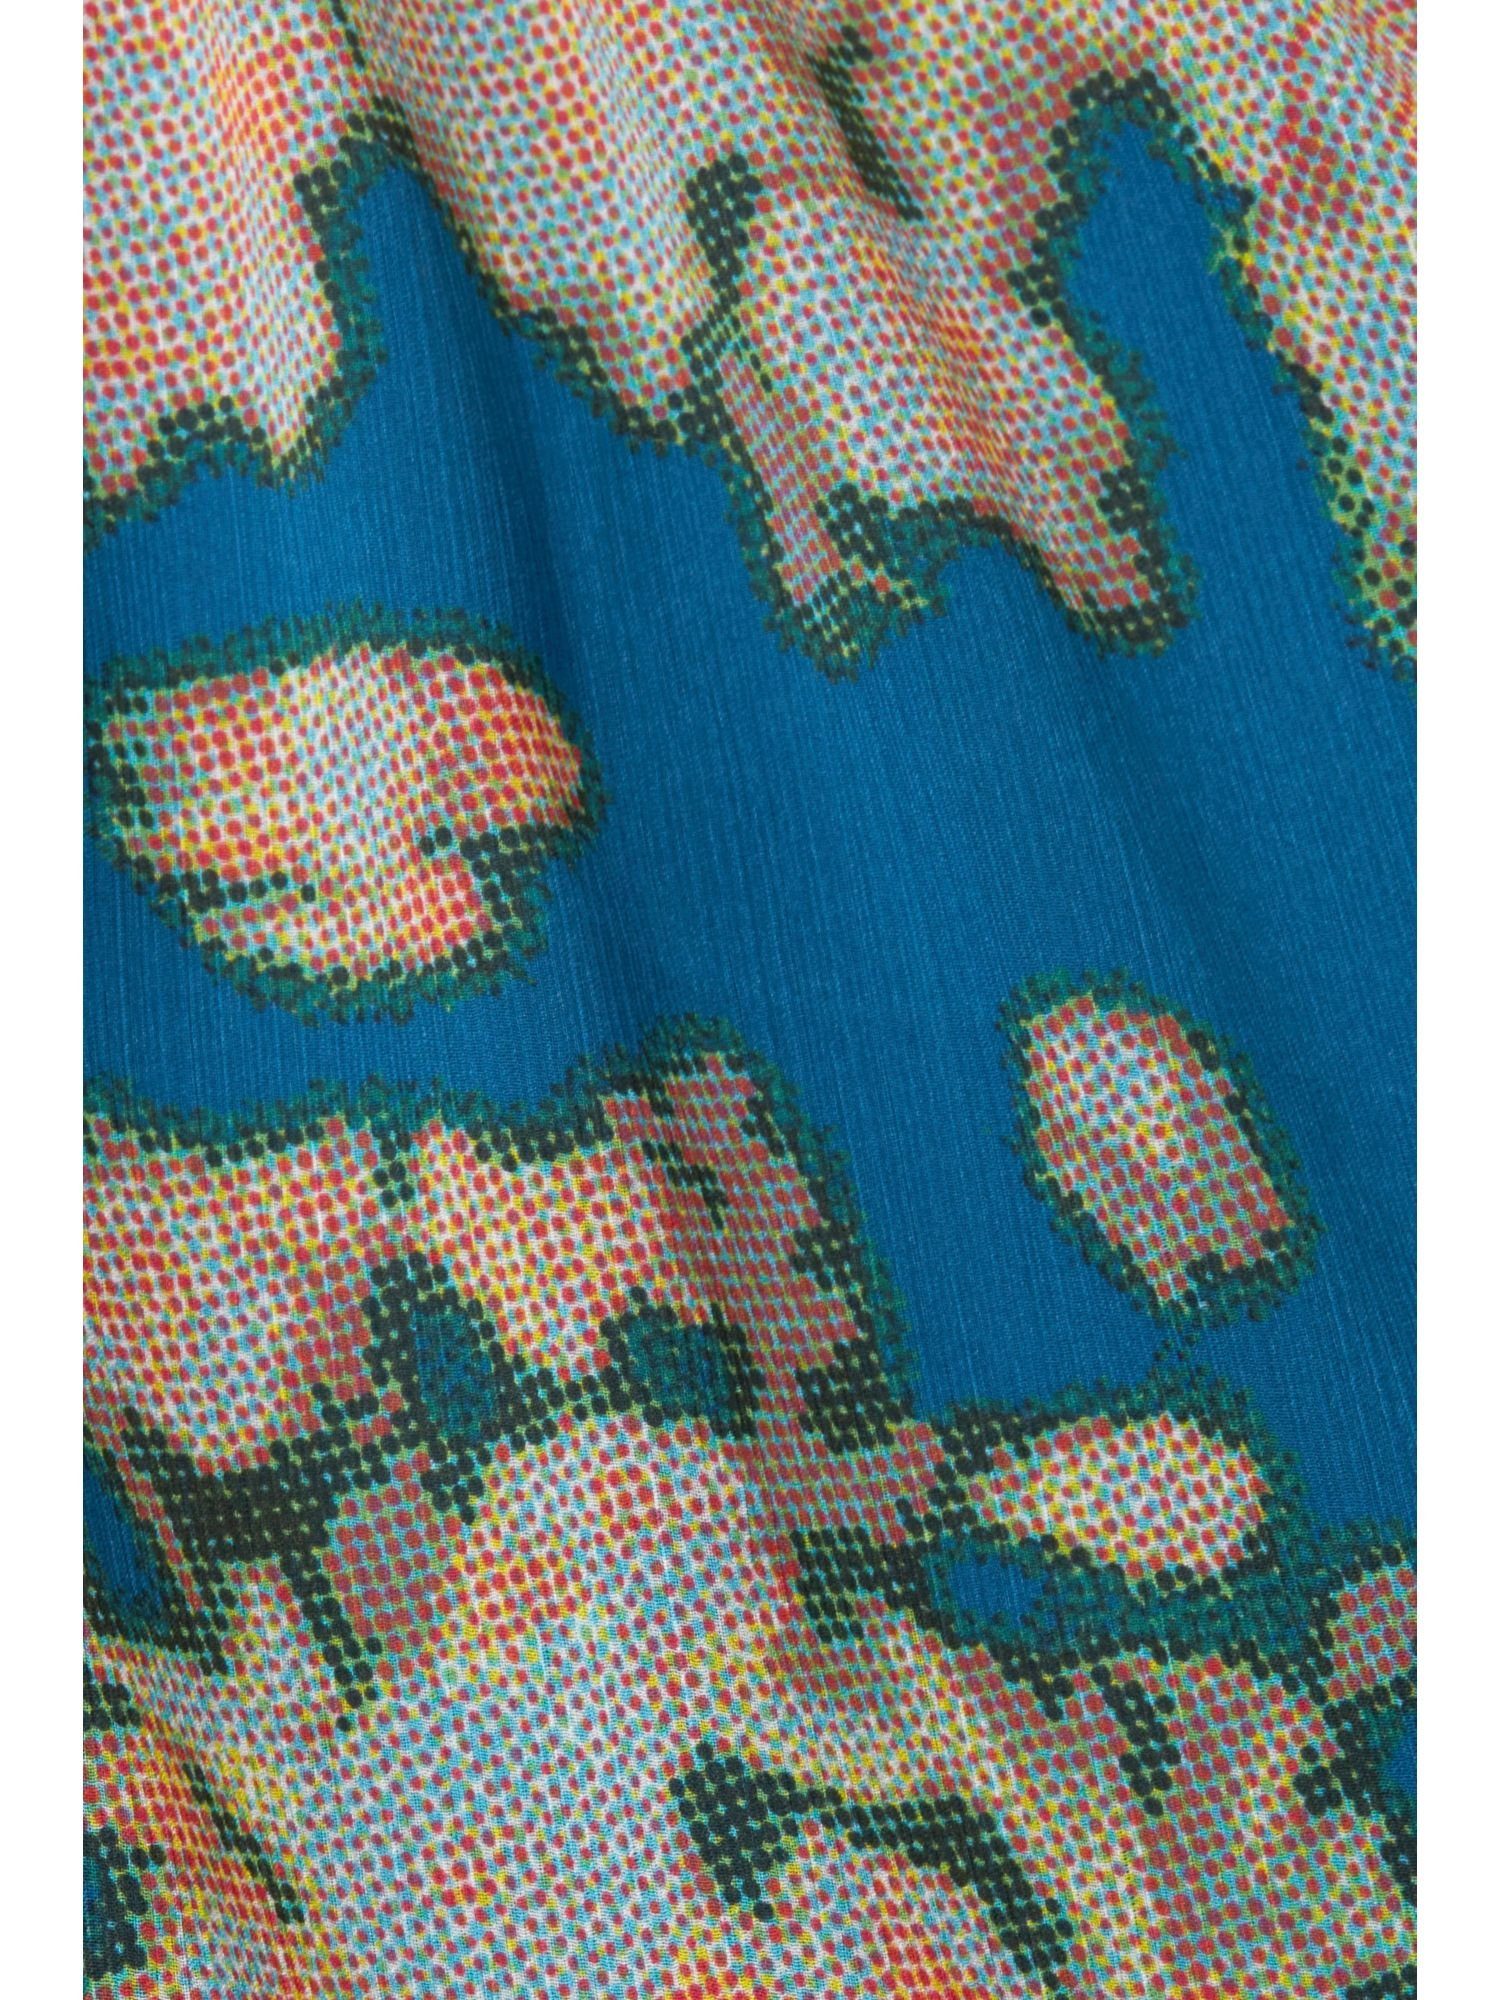 edc by Esprit Midikleid BLUE TEAL Chiffon-Kleid Muster mit